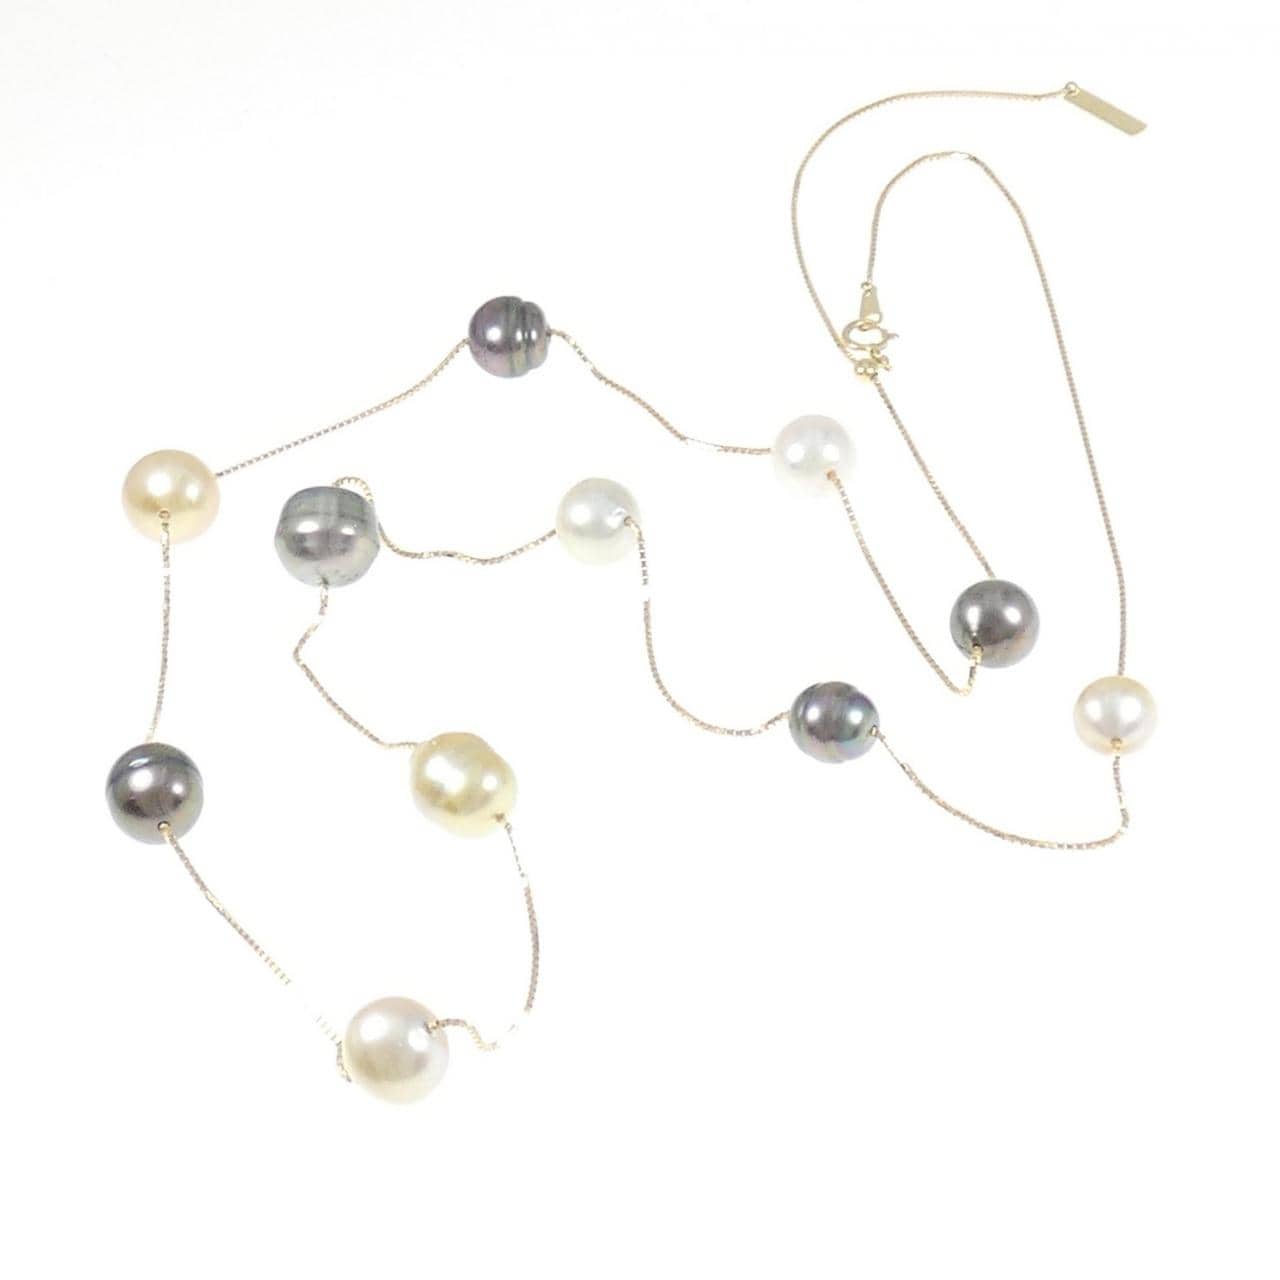 Tasaki pearl necklace